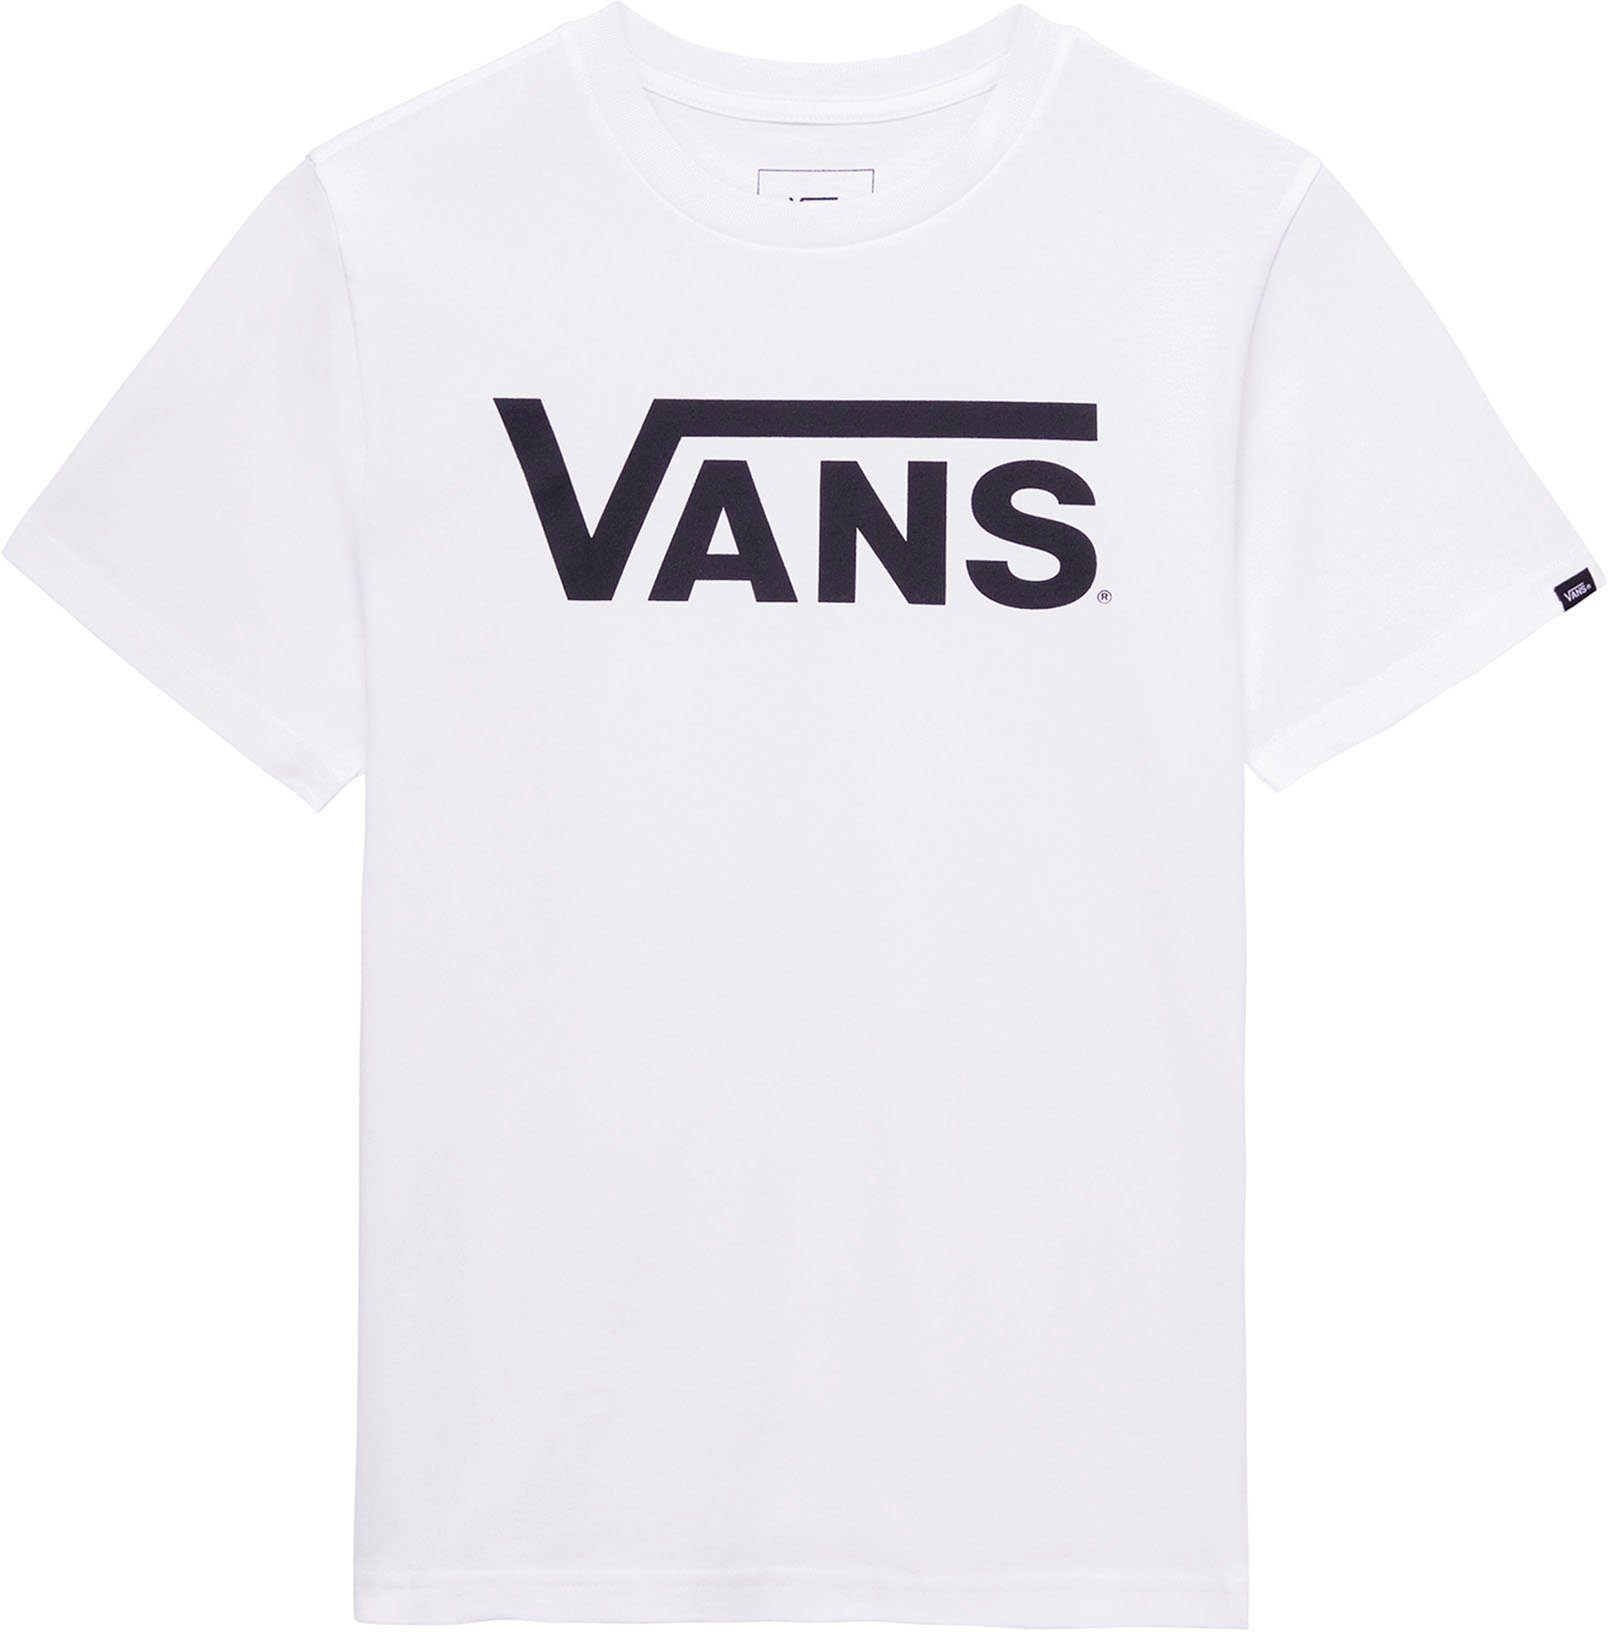 BOYS Vans VANS CLASSIC T-Shirt weiß